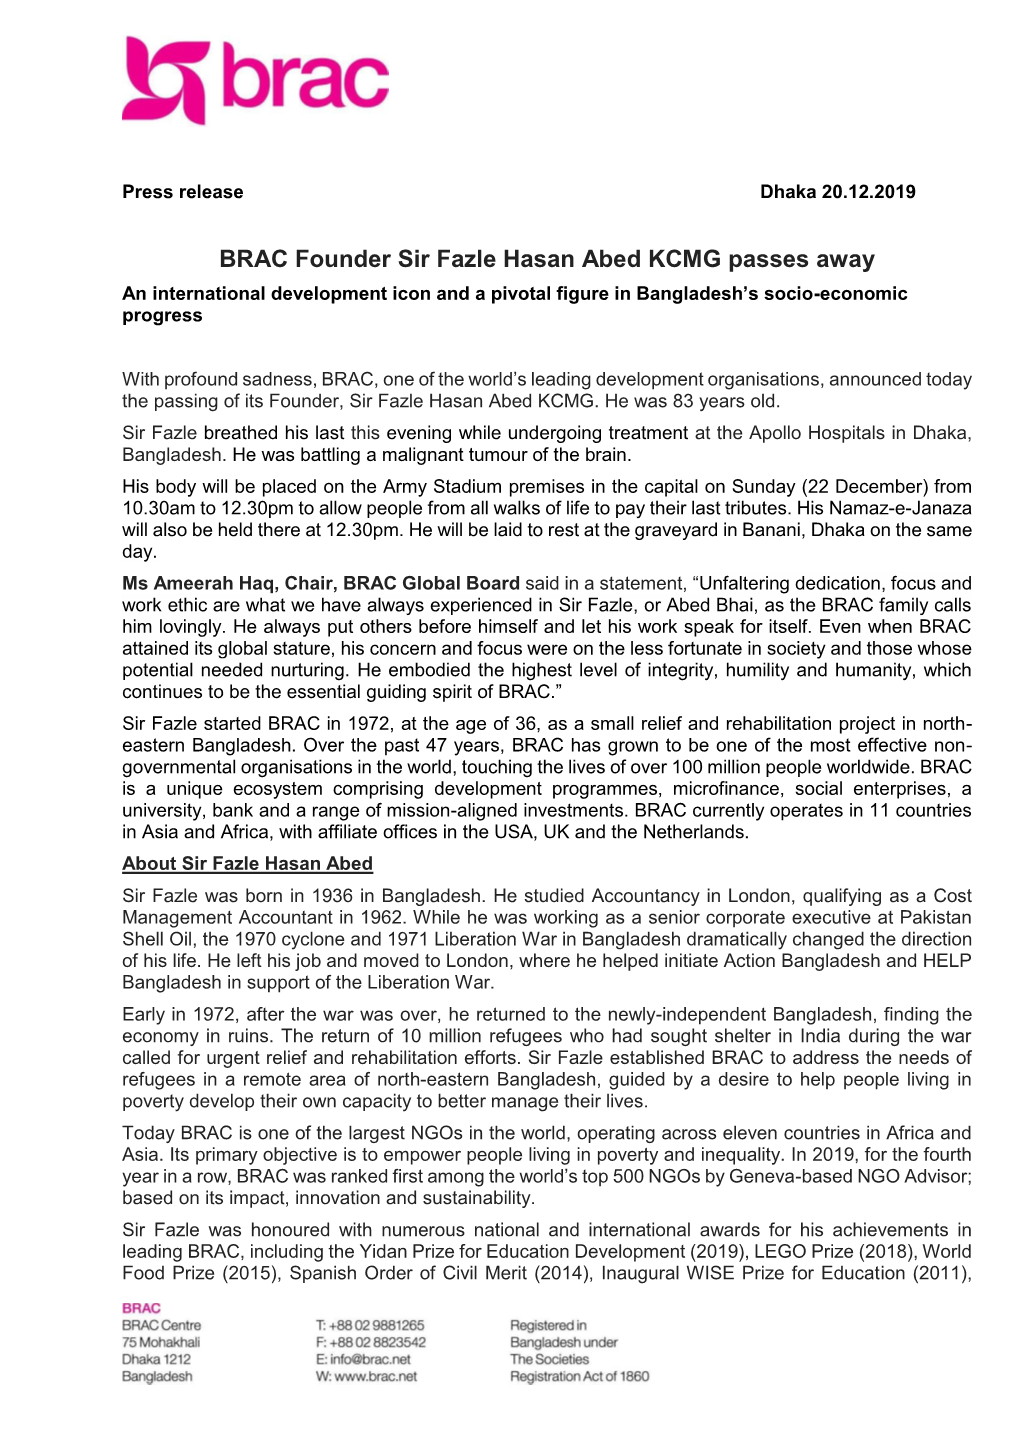 BRAC Founder Sir Fazle Hasan Abed KCMG Passes Away an International Development Icon and a Pivotal Figure in Bangladesh’S Socio-Economic Progress